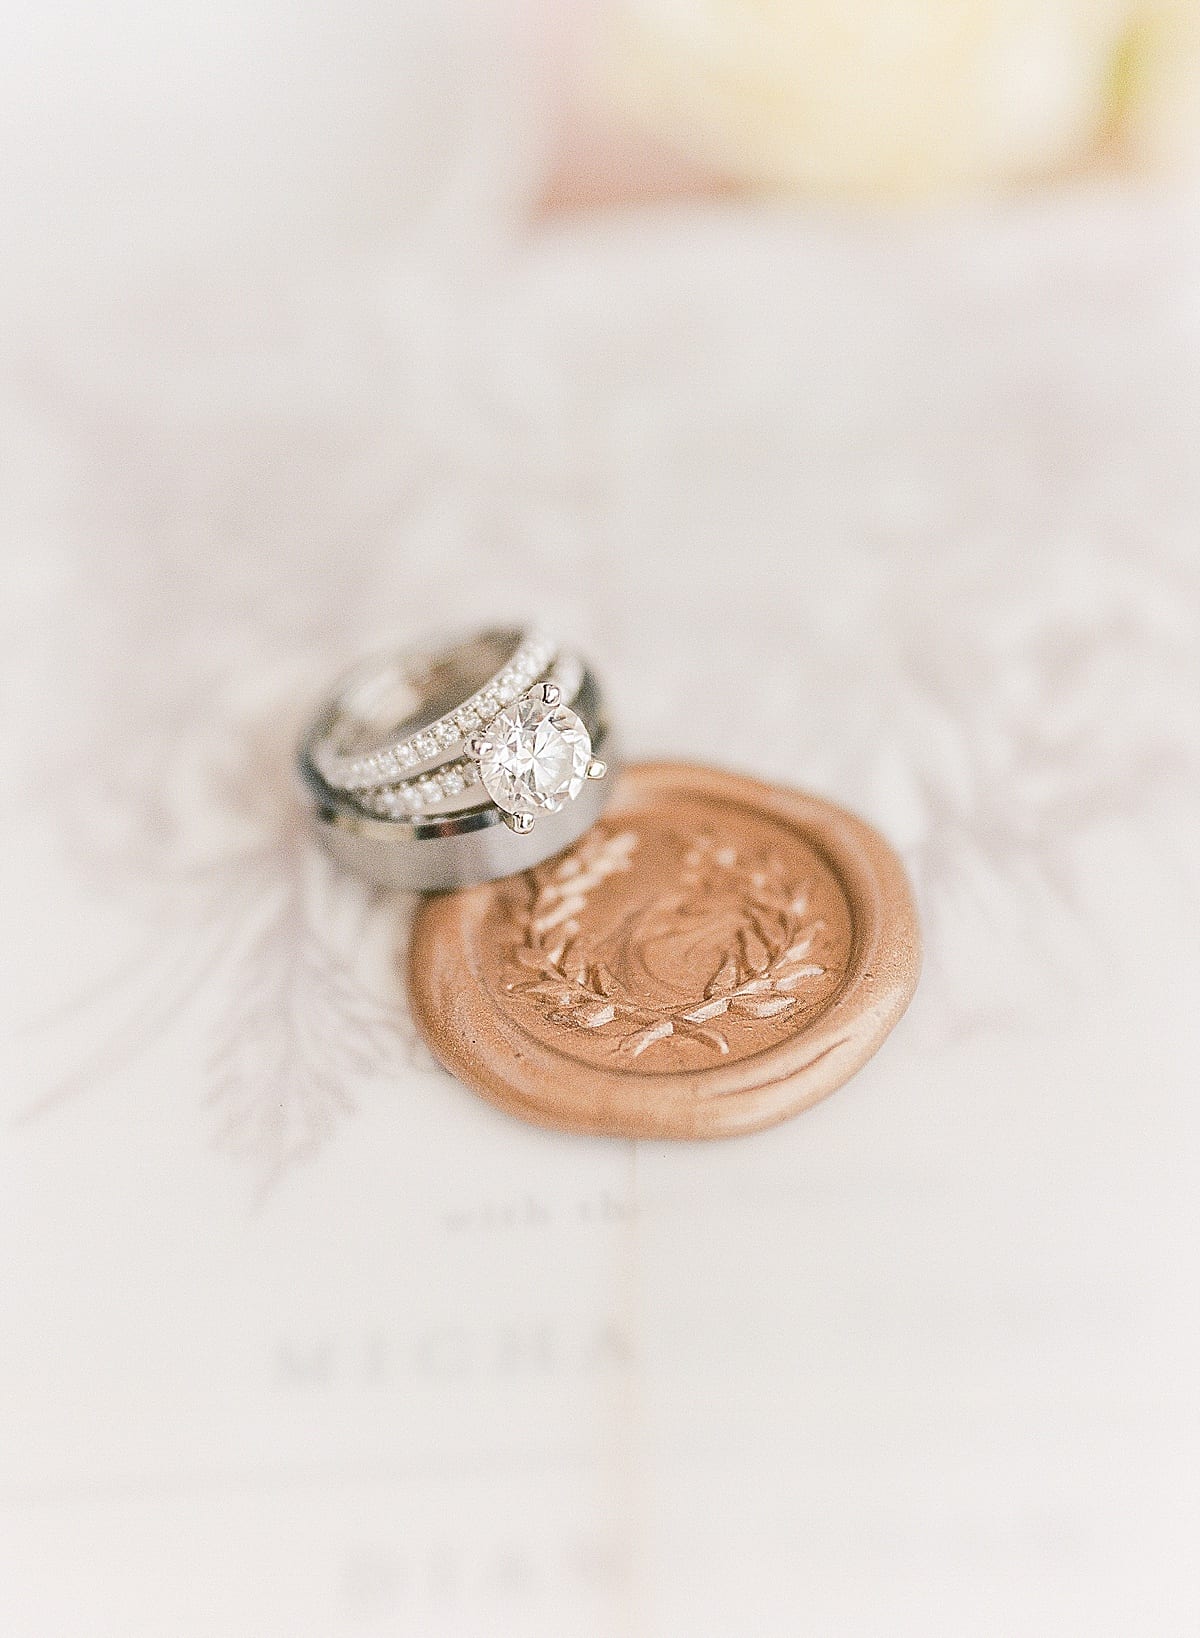 Wedding rings on wax seal on invitation suite photo